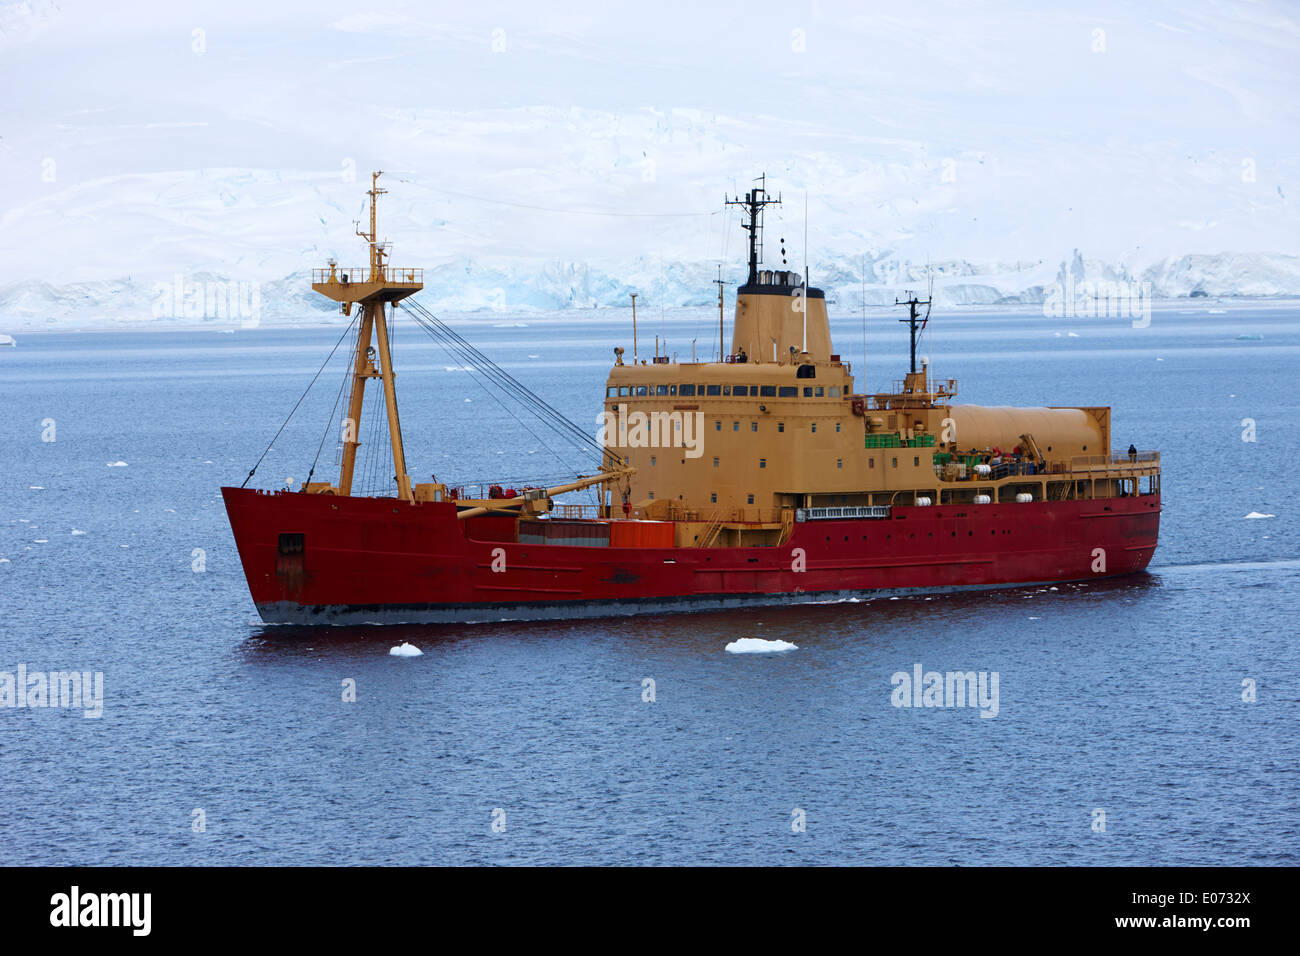 chilean navy Almirante Vial icebreaker on patrol in andvord Bay Antarctica Stock Photo